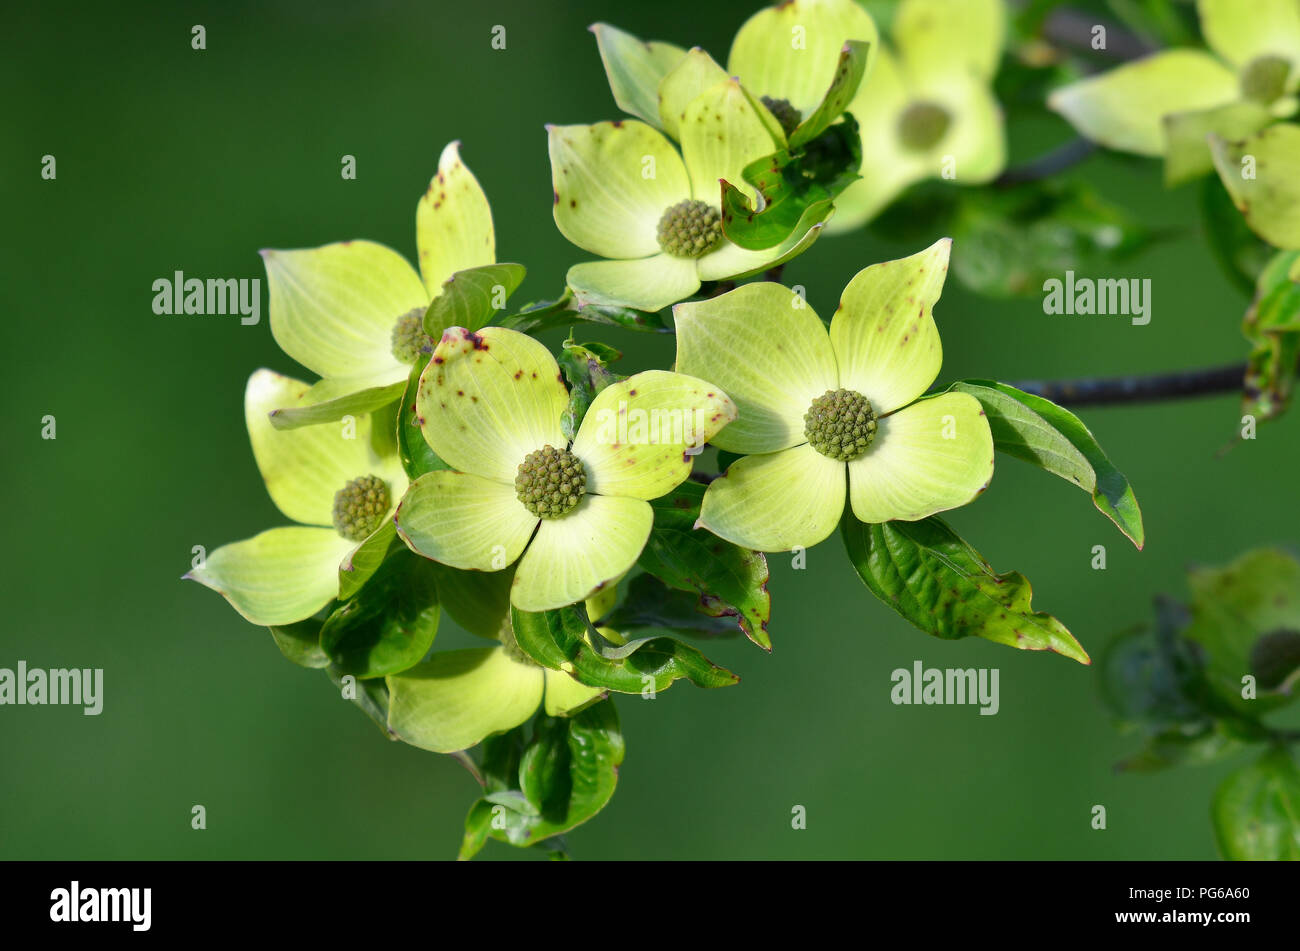 Green flowers of the dogwood  tree Stock Photo